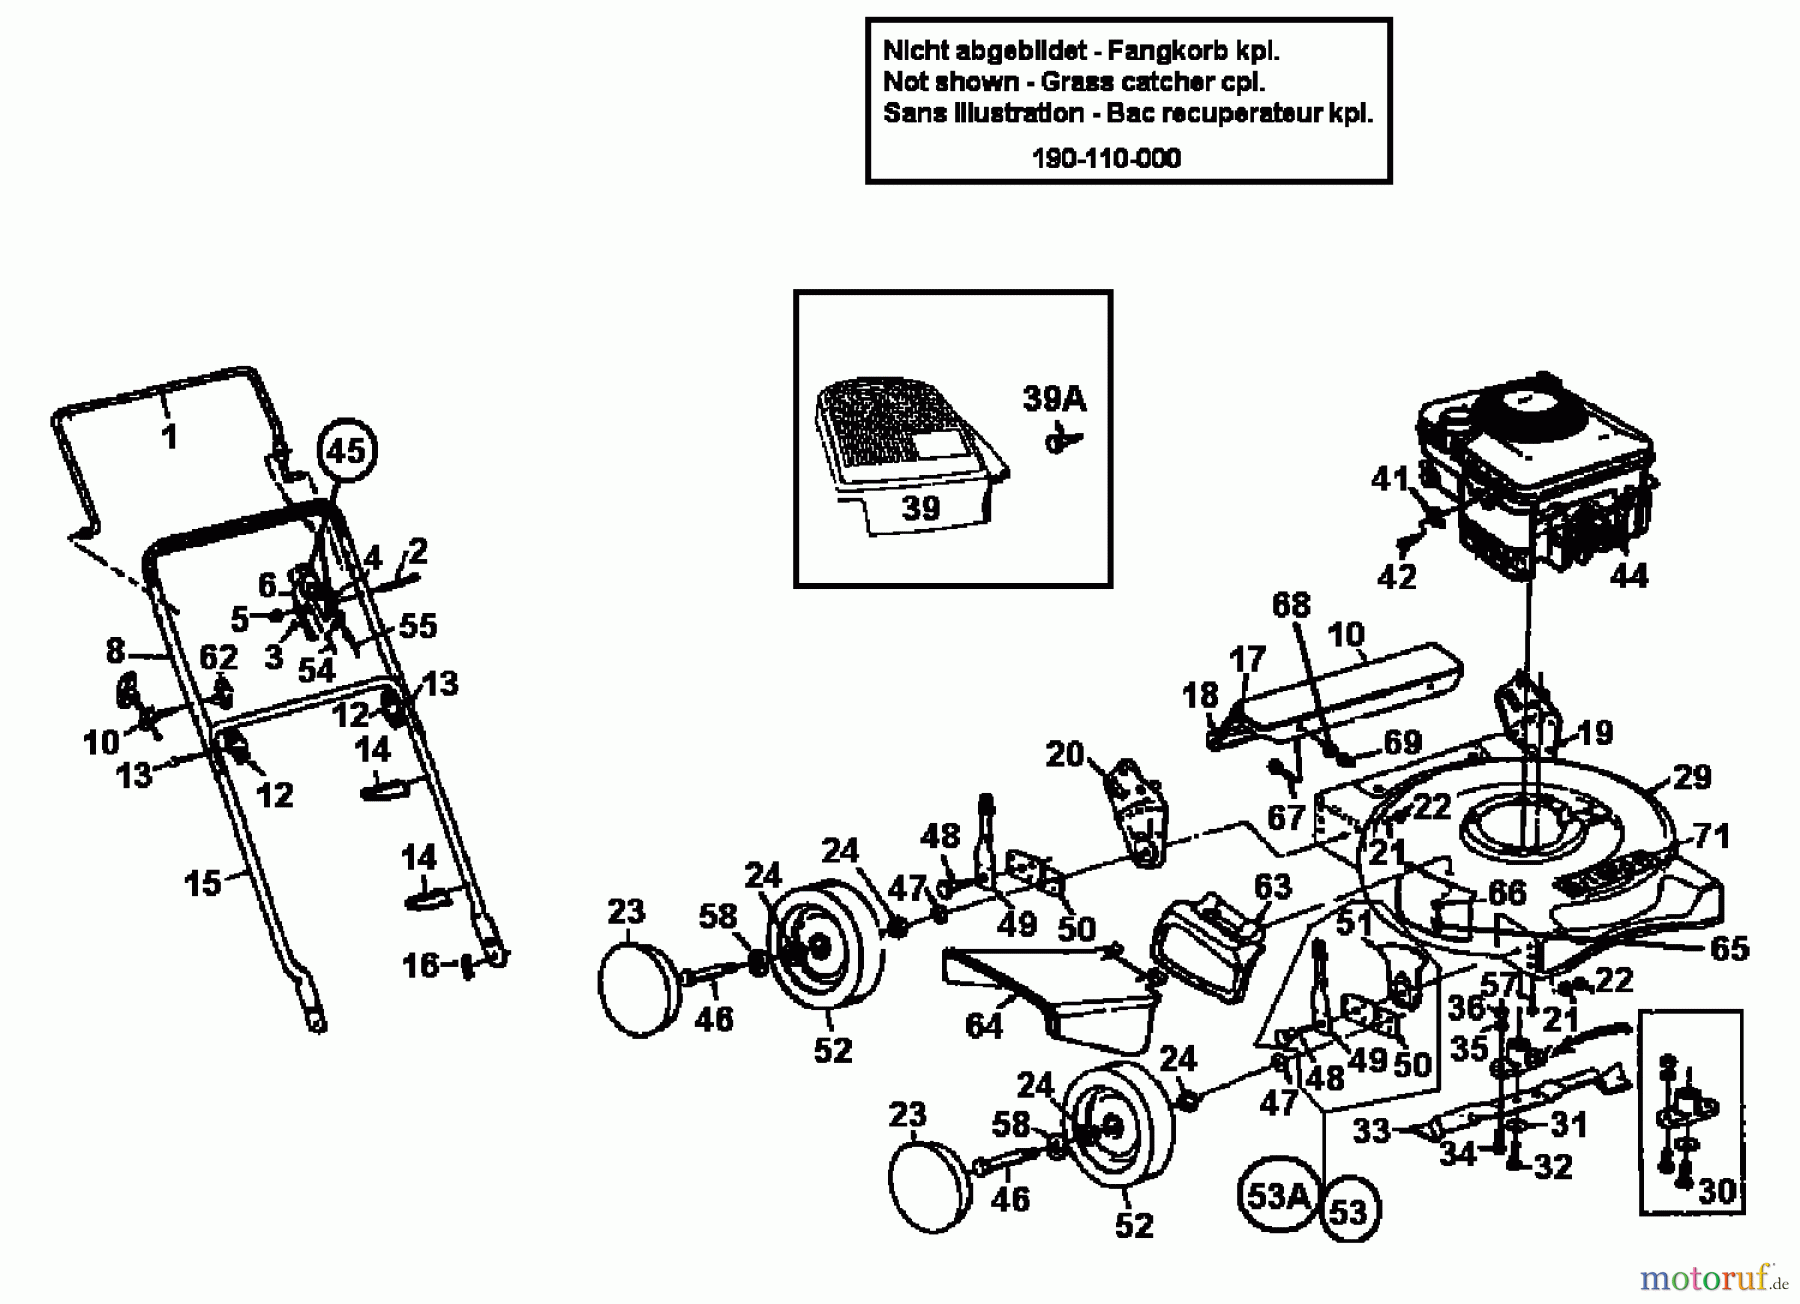  Gutbrod Motormäher SB 46 04047.01  (1996) Grundgerät